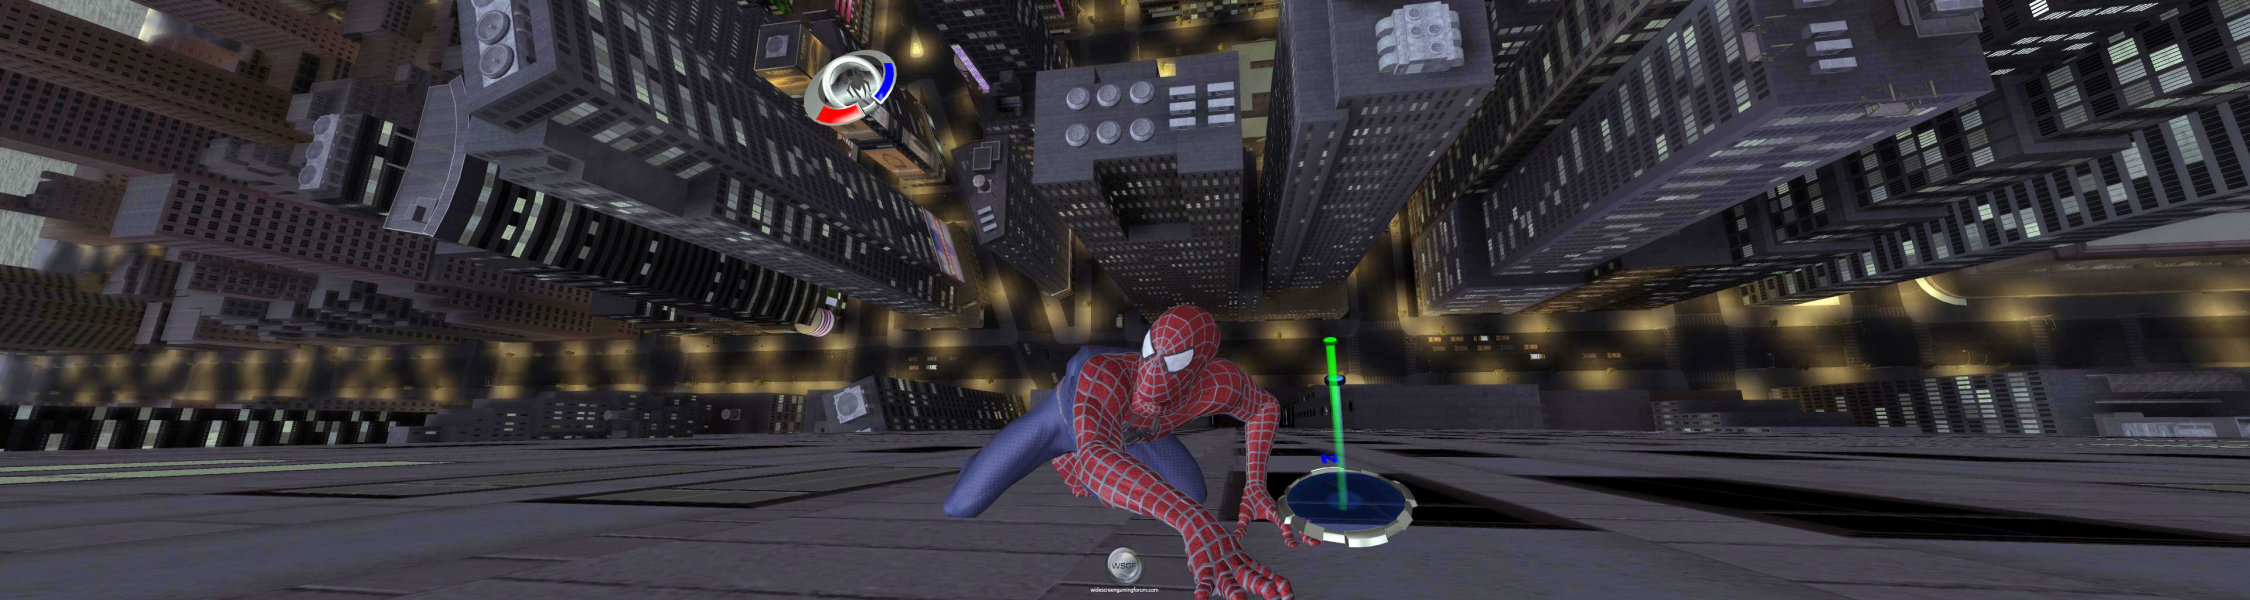 Marvel spider man pc configuration